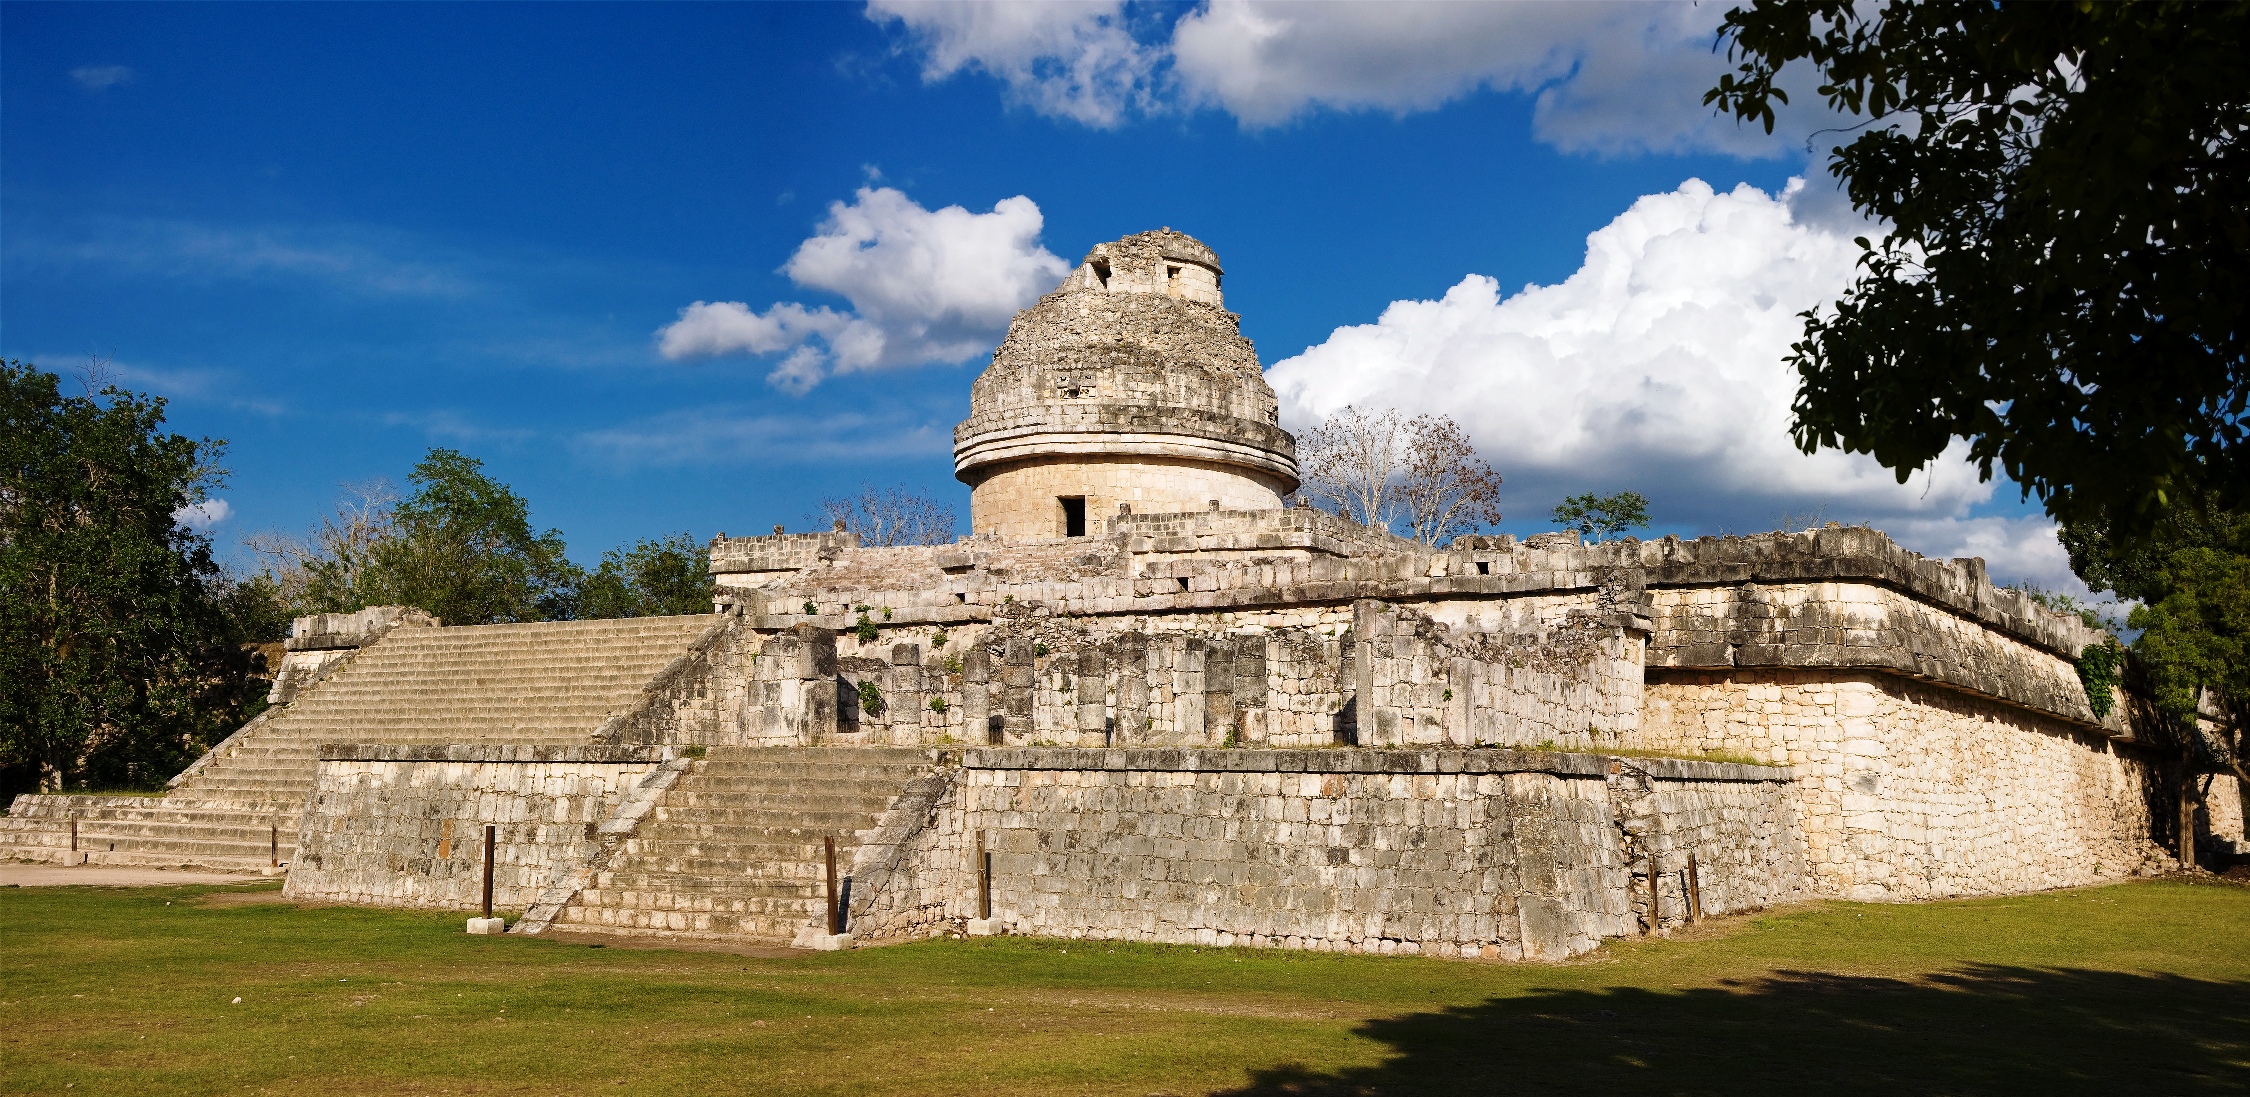 Chichén Itzá: A historical Mayan City